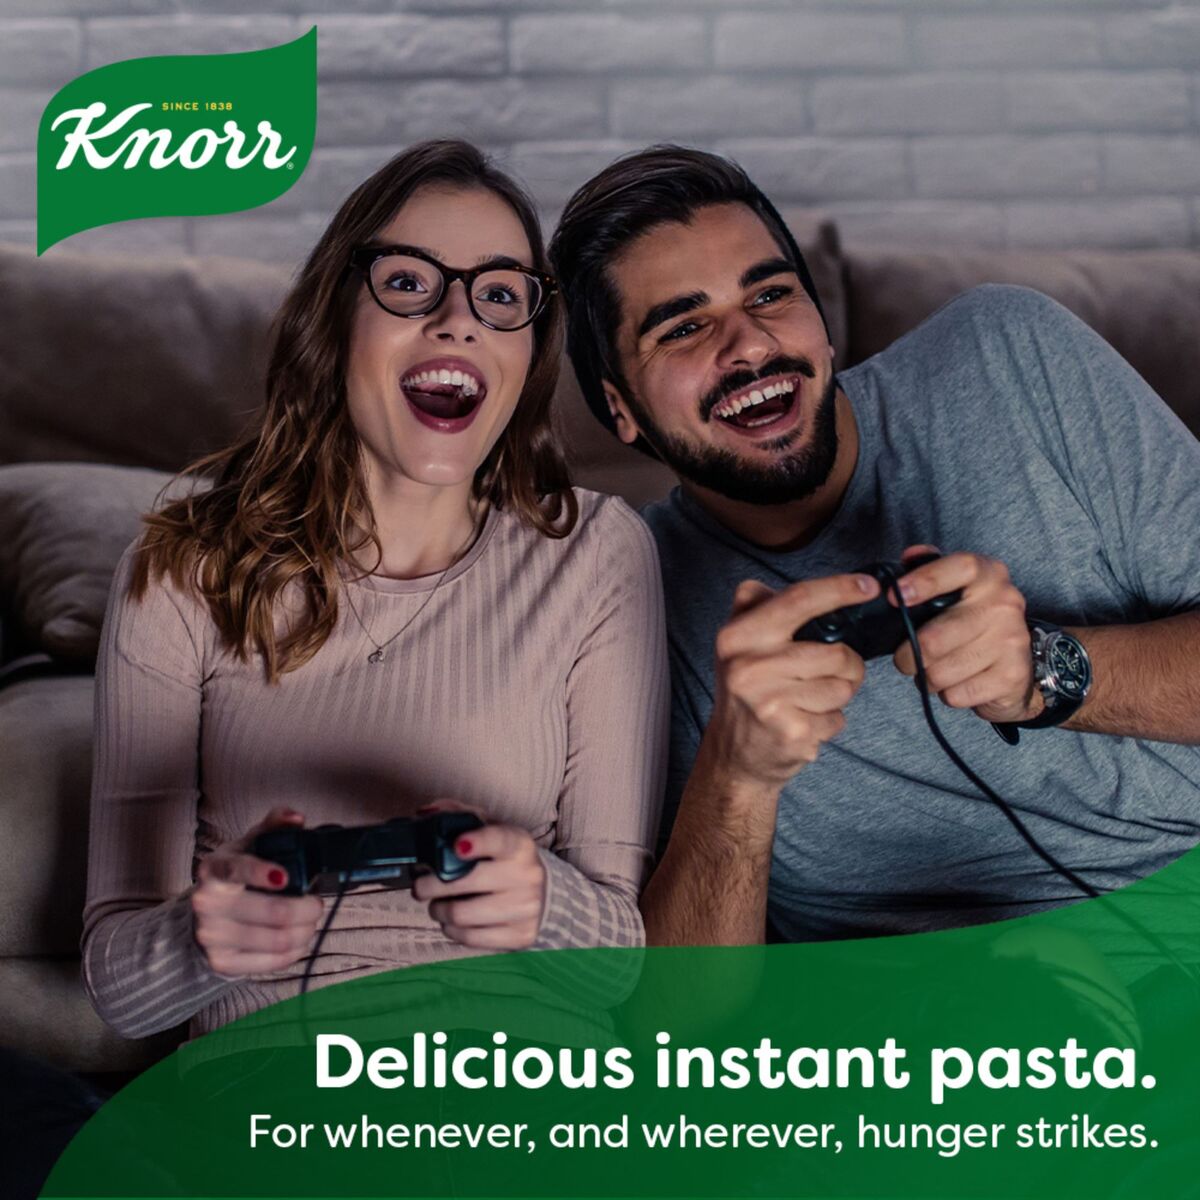 Knorr Instant Pasta Napoletana Sauce 67g